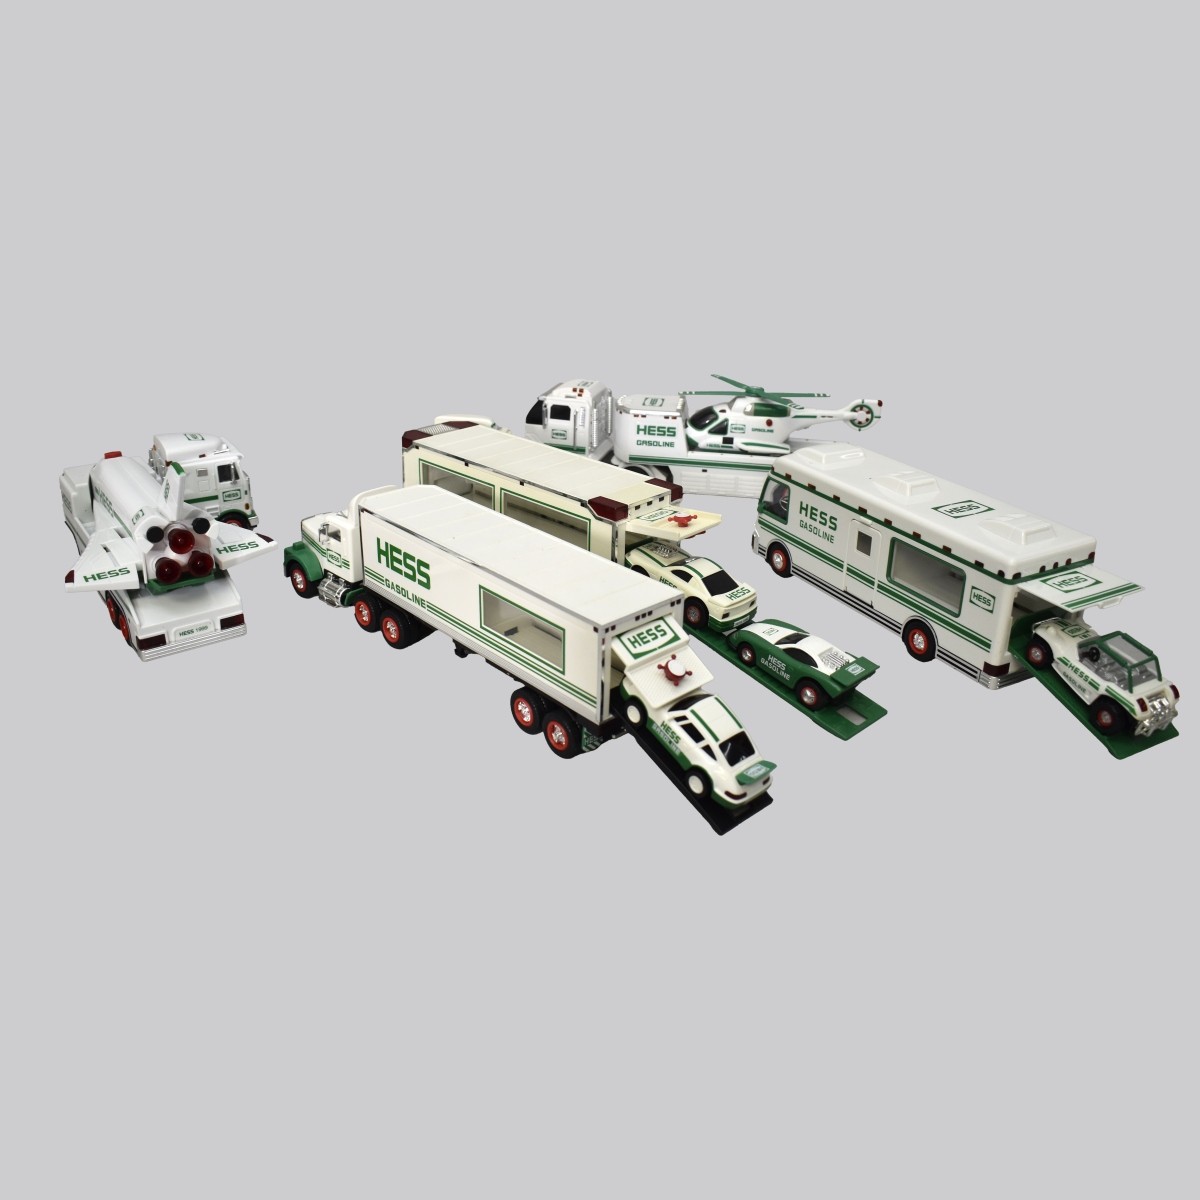 Circa 1900s - 2000s Hess Toy Trucks